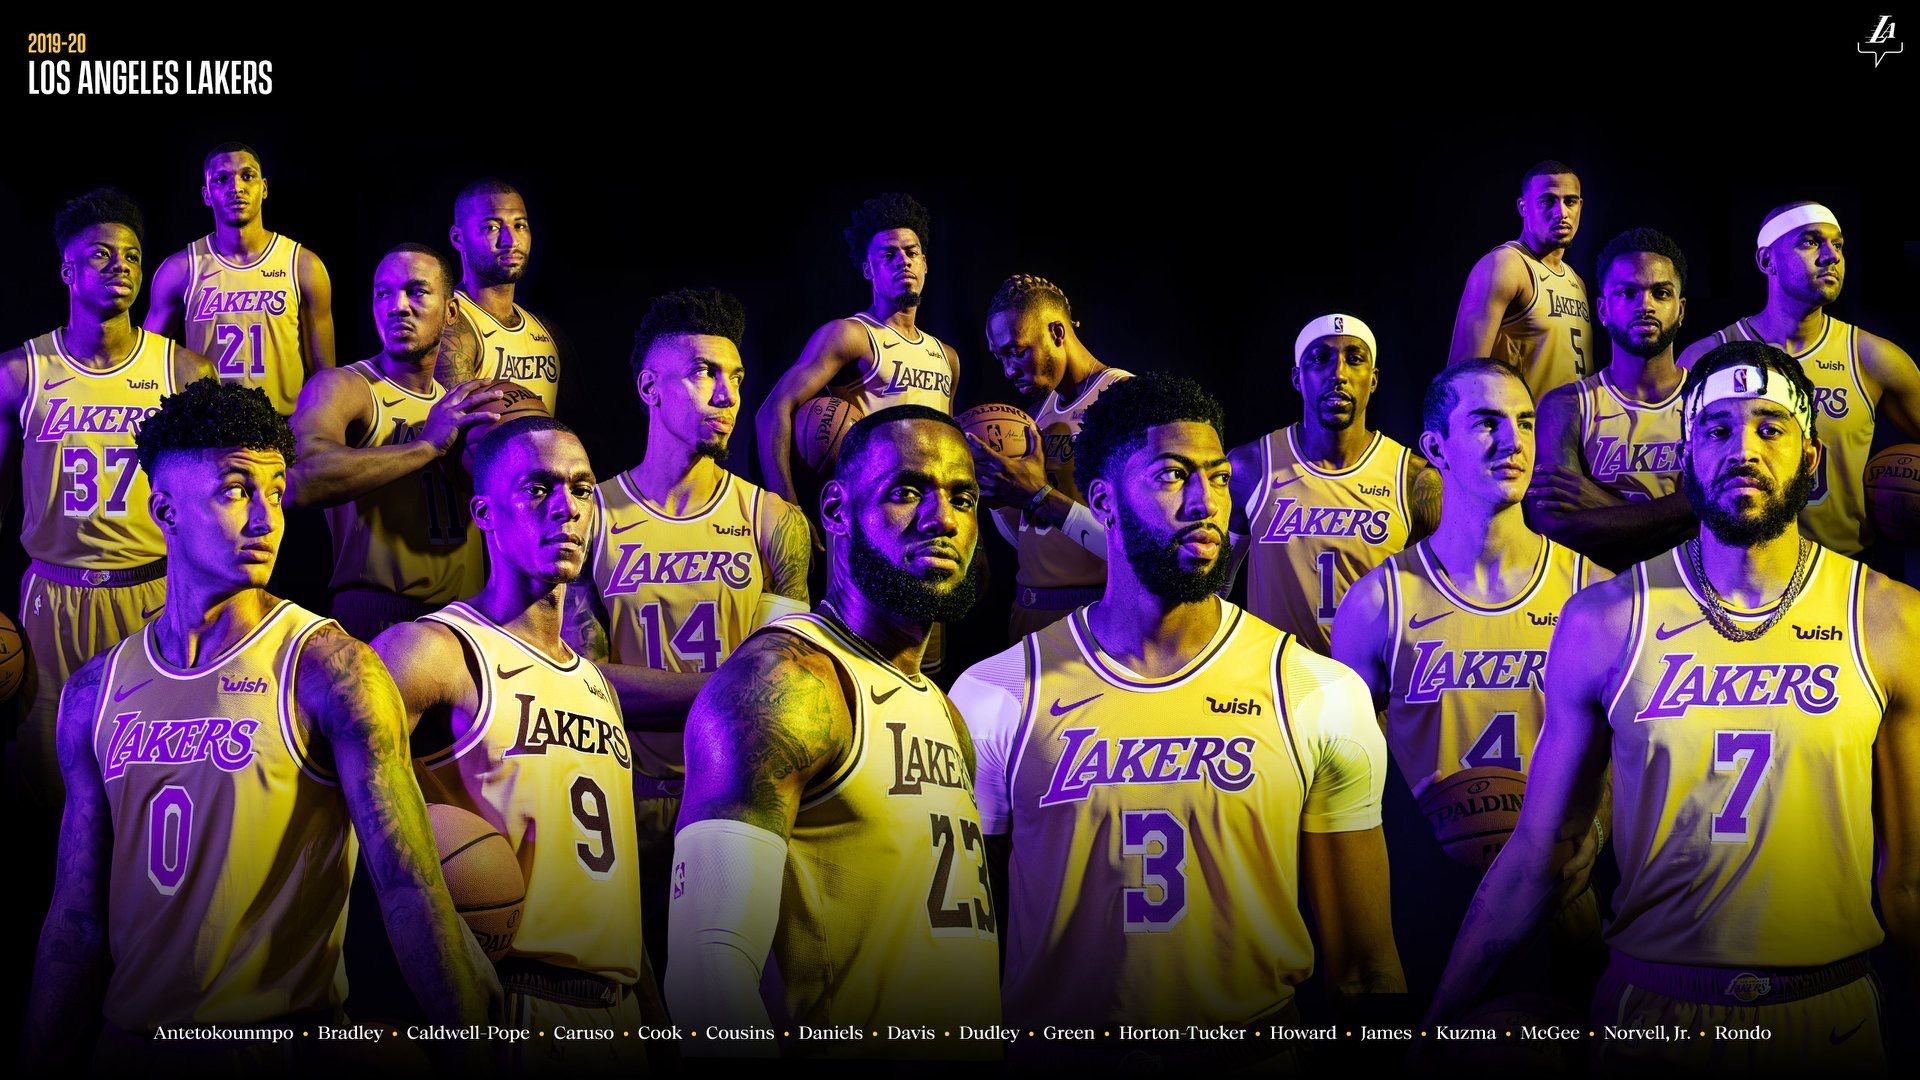 Los Angeles Lakers On Instagram: “We're Back. Introducing Your 2019 20 Los Angeles Lakers.”. Lakers Wallpaper, Los Angeles Lakers, Lakers Team